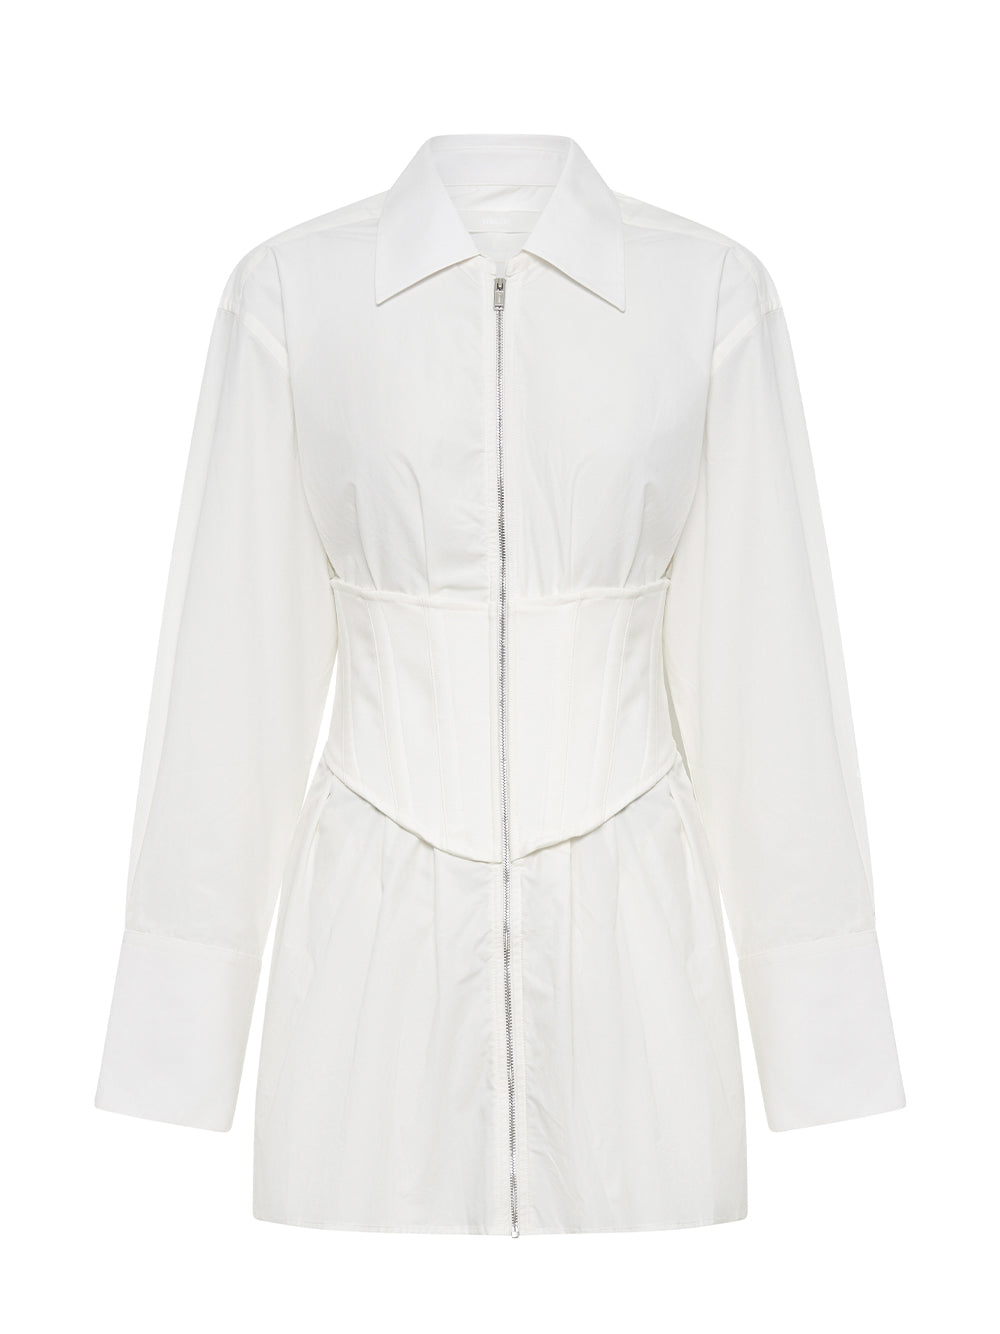 Internal Shirt Corset Dress (White)